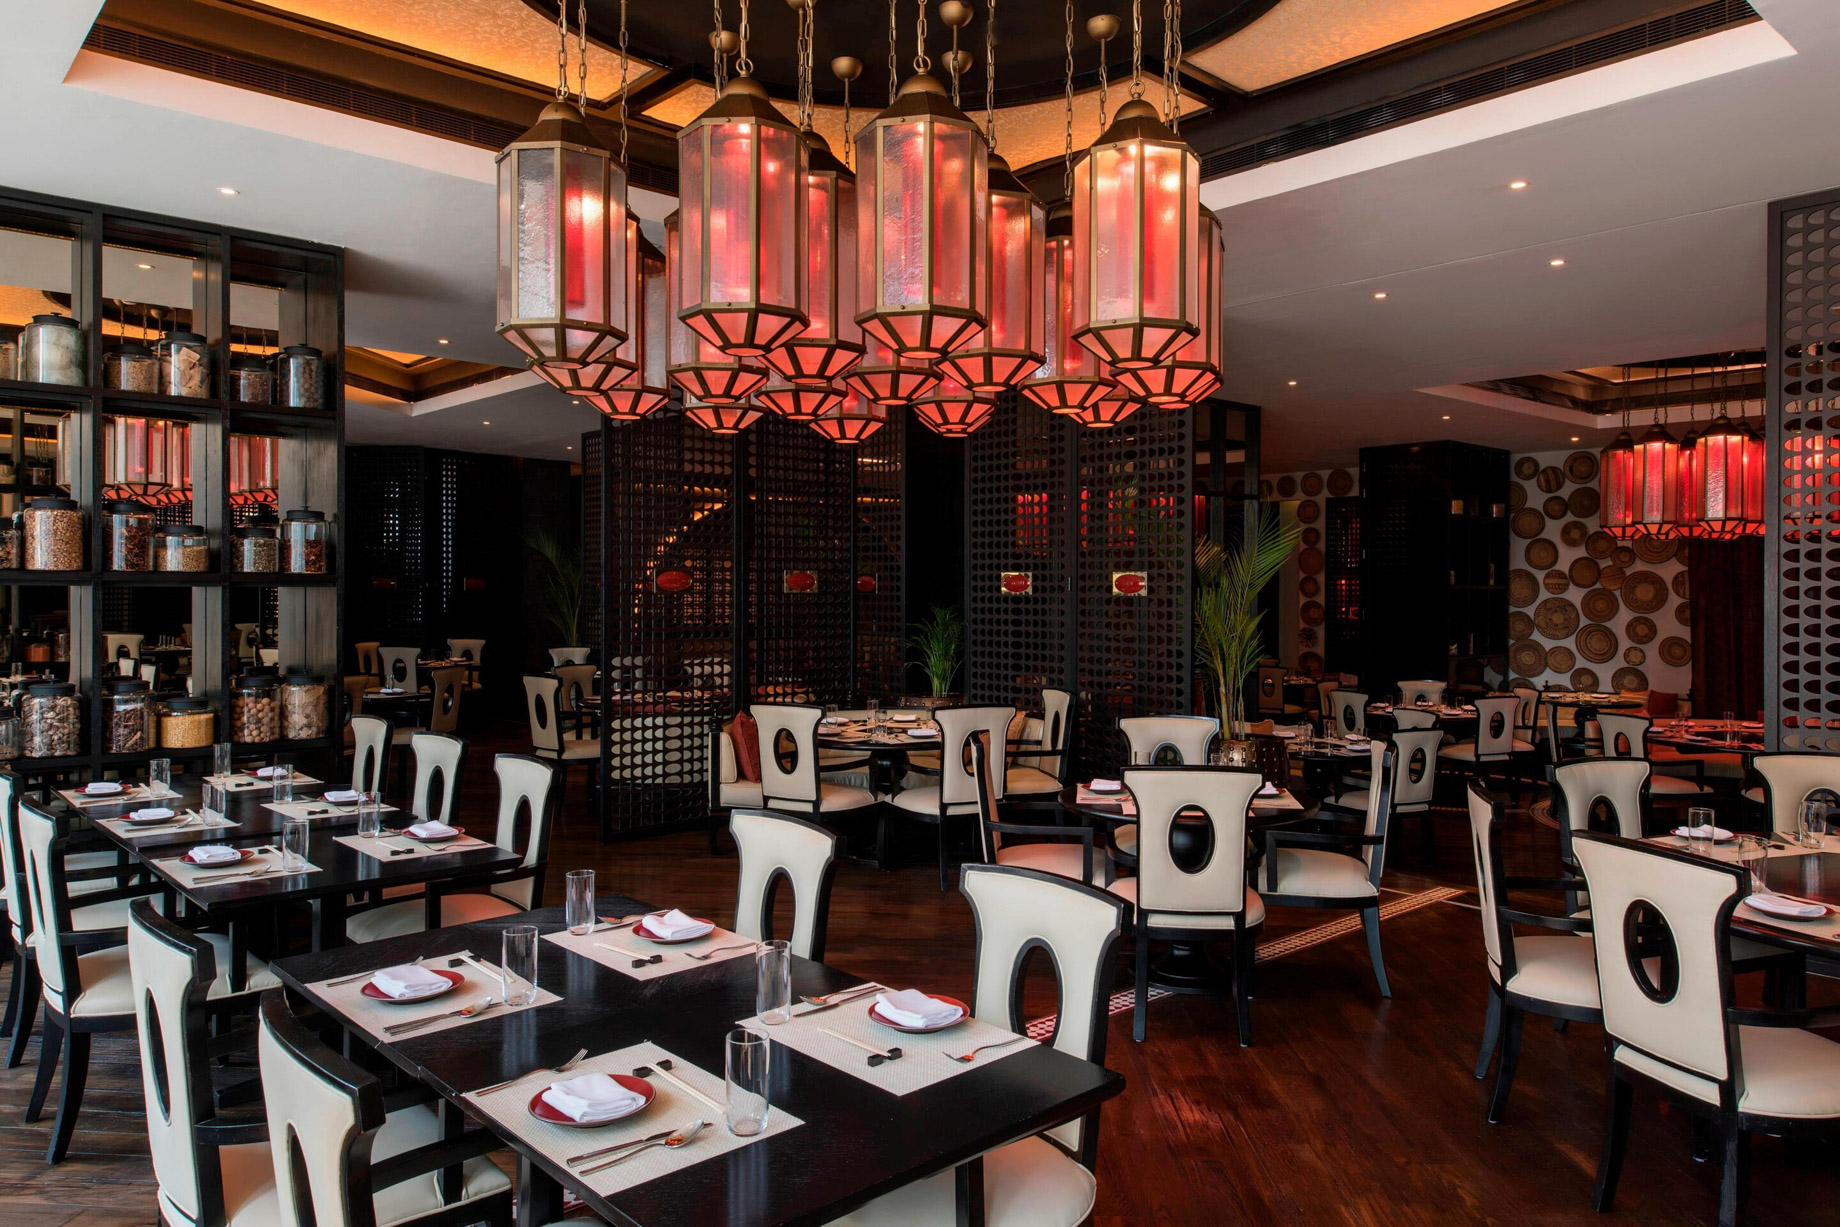 W Doha Hotel – Doha, Qatar – Spice Market Restaurant Interior